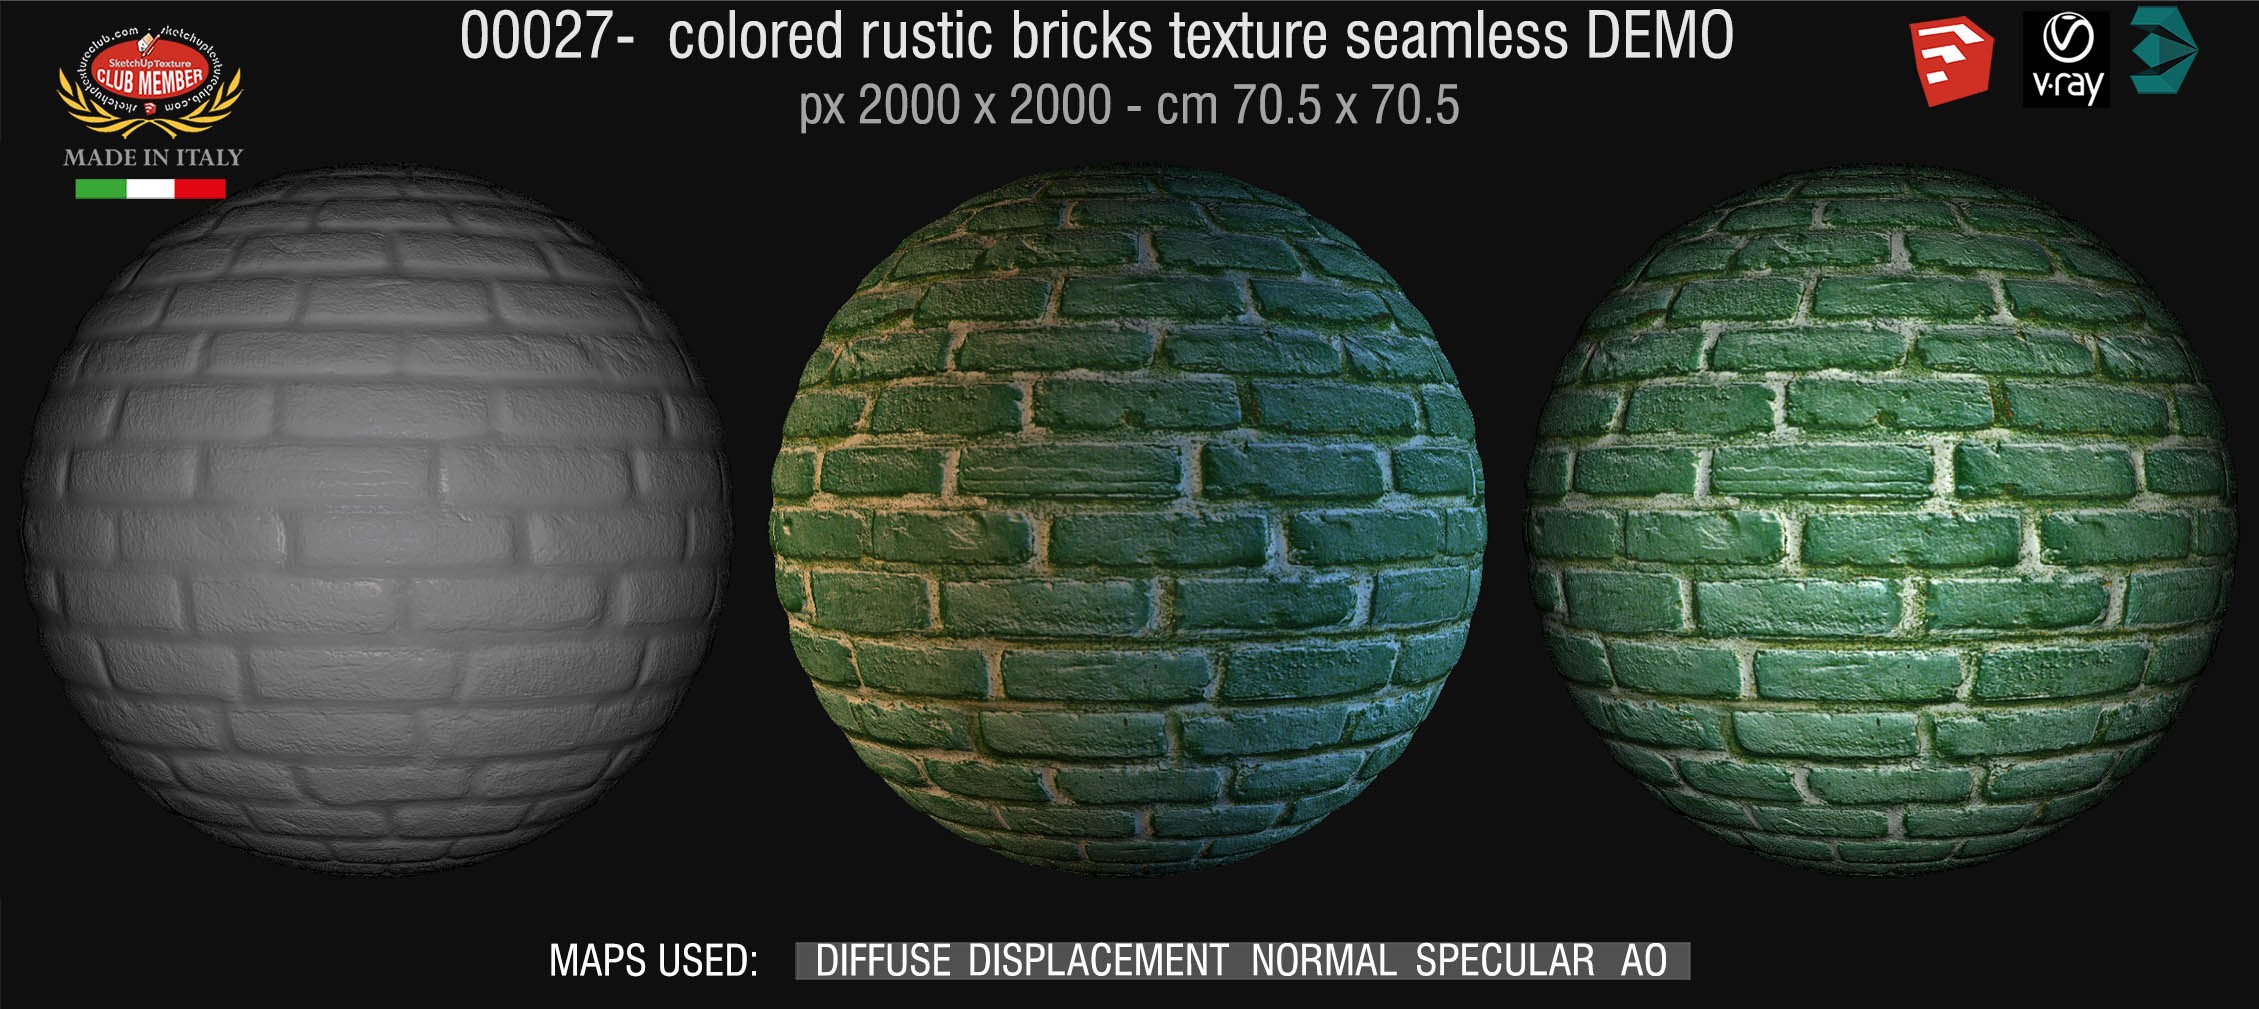 00027 colored rustic bricks texture seamless + maps DEMO